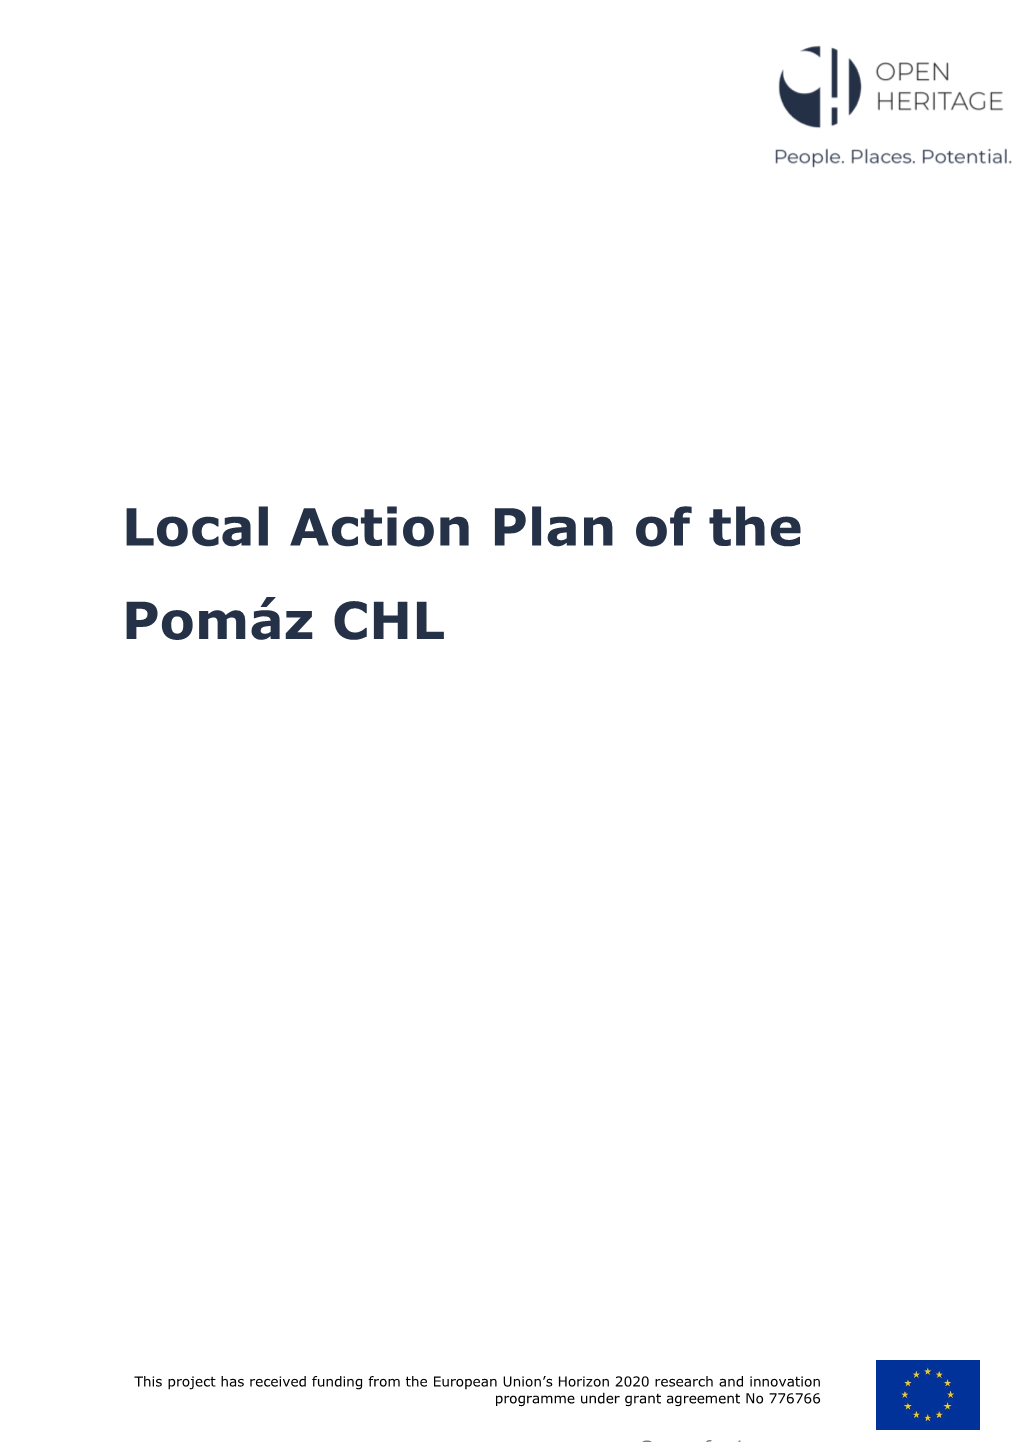 Local Action Plan Pomaz